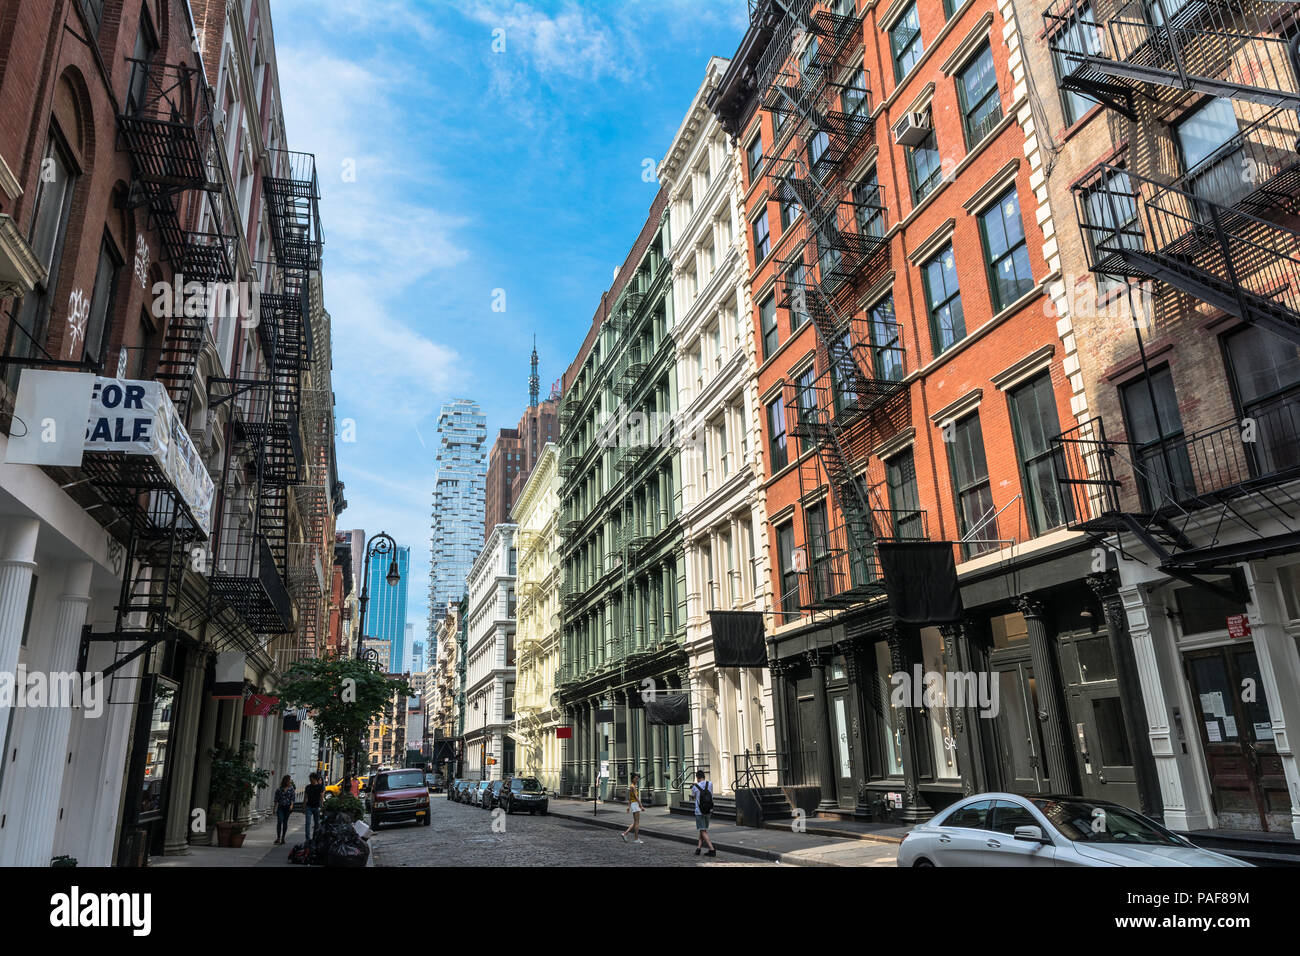 Manhattan,New York City,USA - July 1, 2018 : View of Greene Street in ...